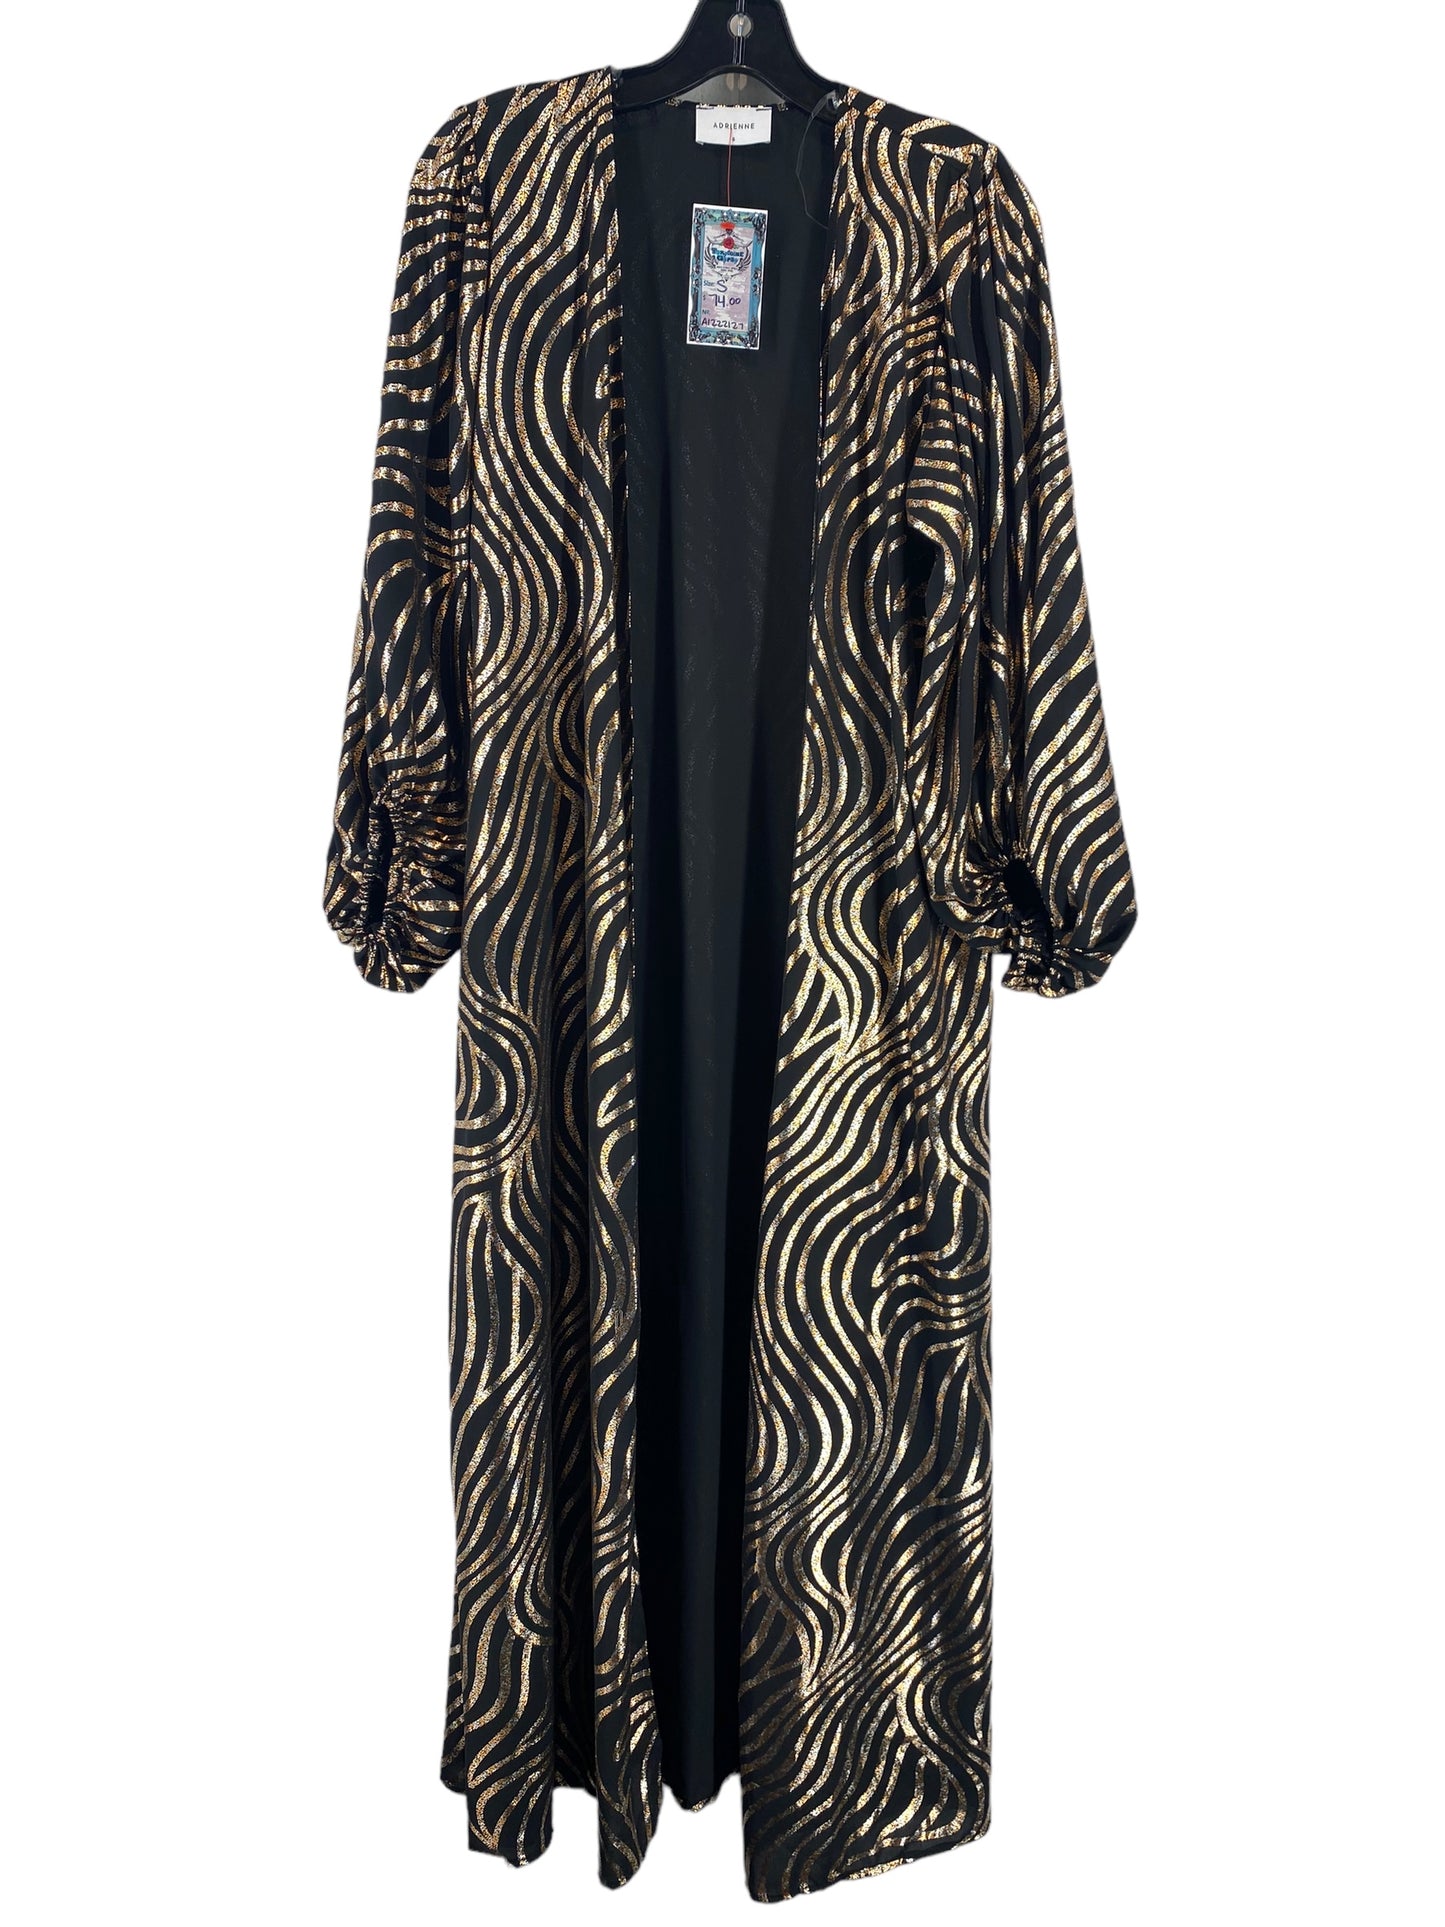 Kimono By Adrienne Vittadini  Size: S